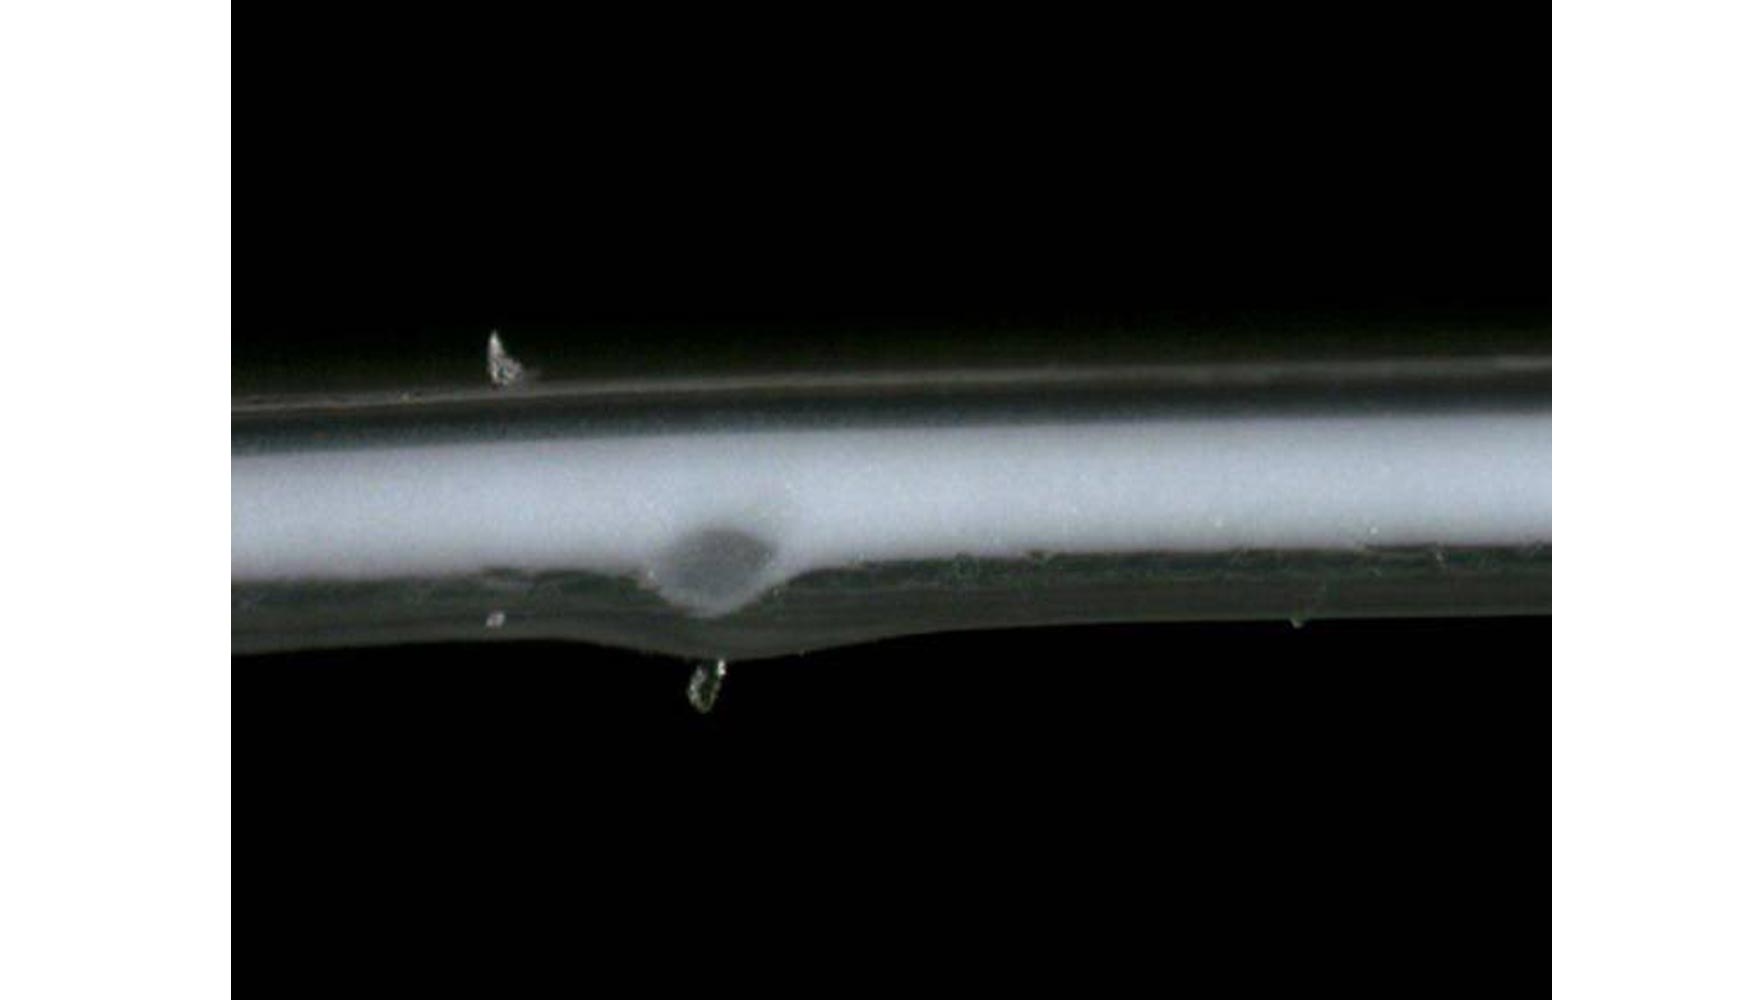 Foto 1: seccin transversal de un gel